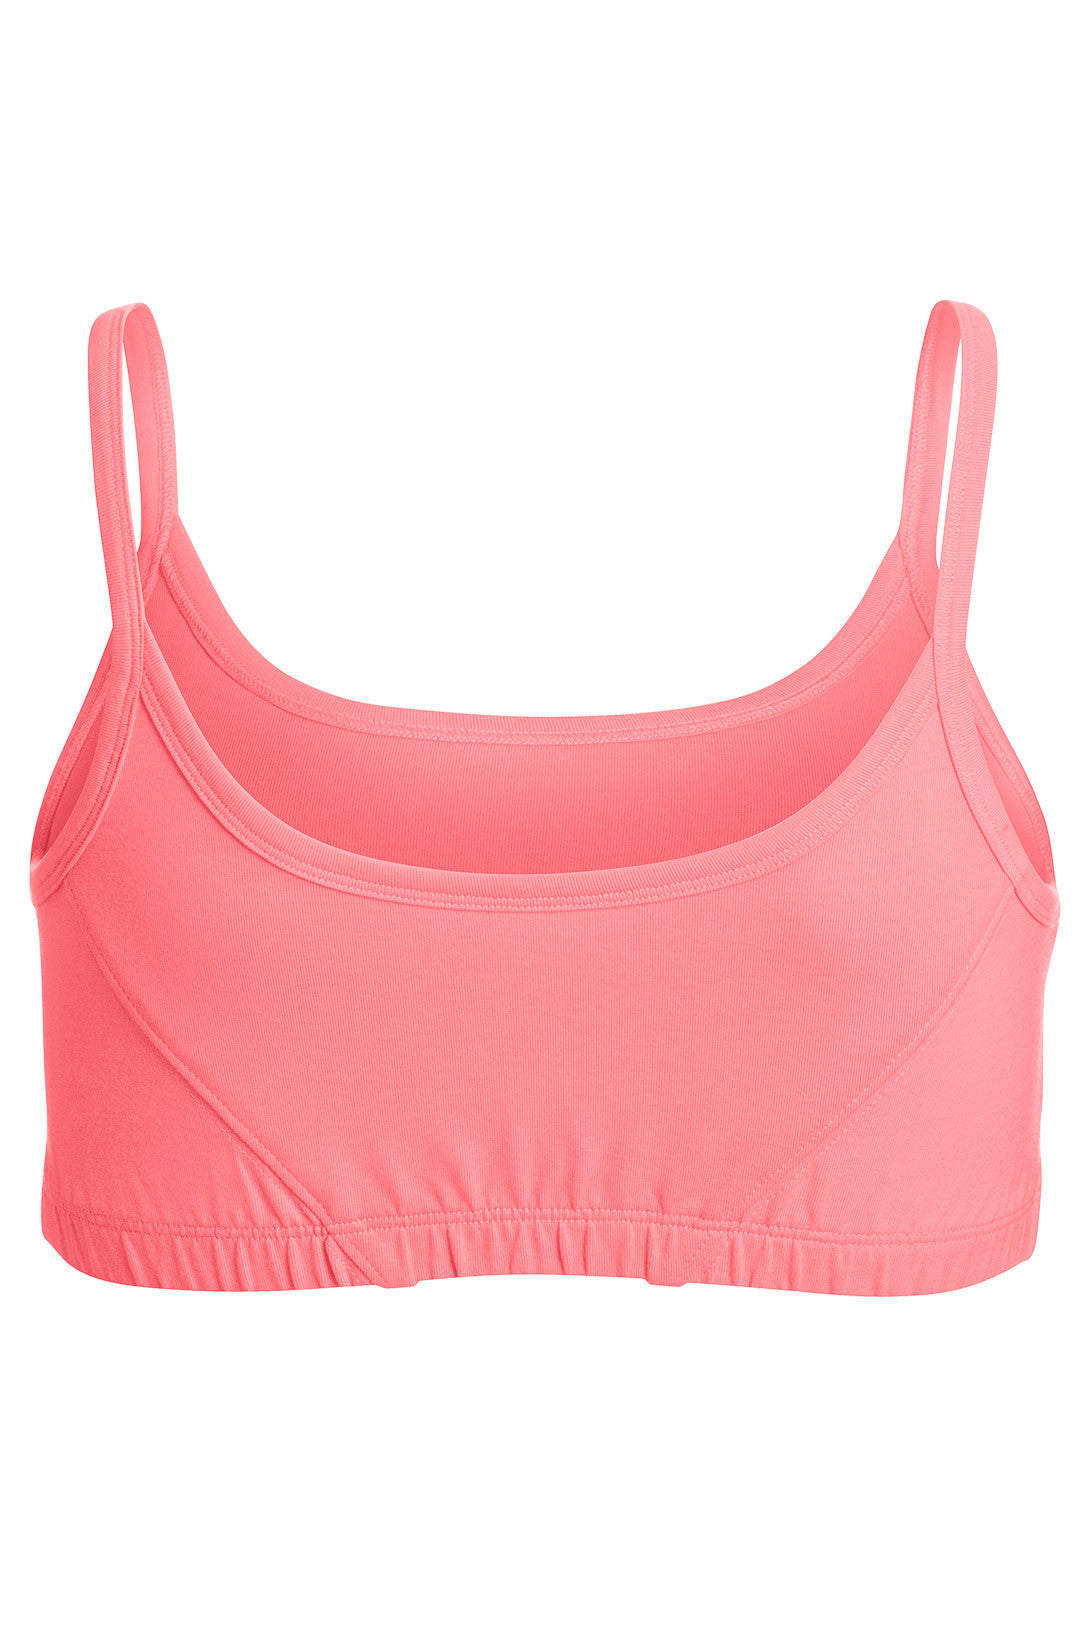 HWRETIE Women's Bra Underwear Breathable Sleep Yoga Cotton Bra Beauty Back  Bra Pink 12(XXL)